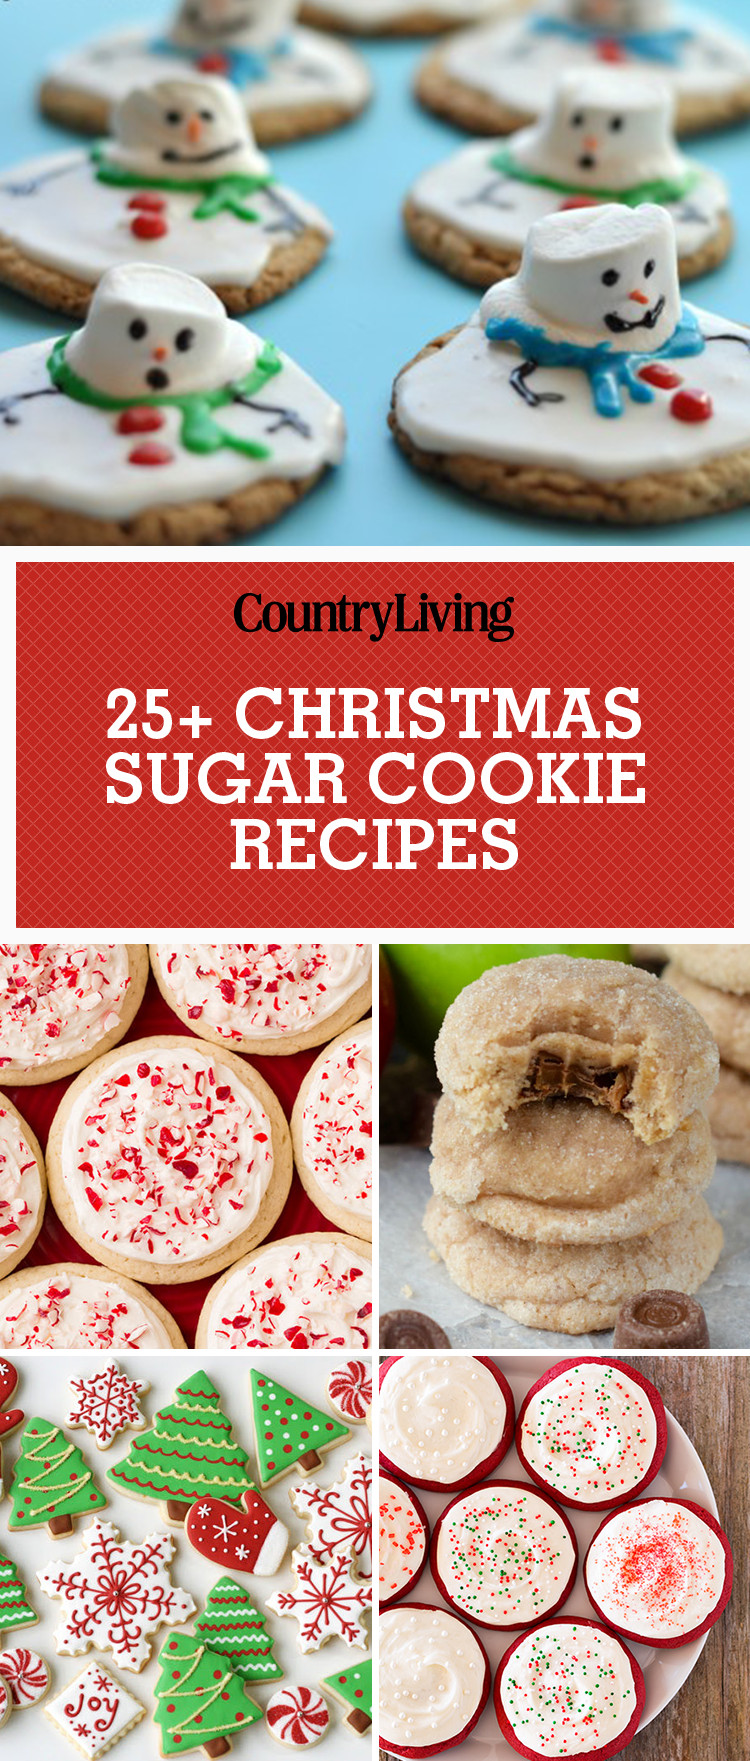 Easy Christmas Sugar Cookies Recipes
 25 Easy Christmas Sugar Cookies Recipes & Decorating